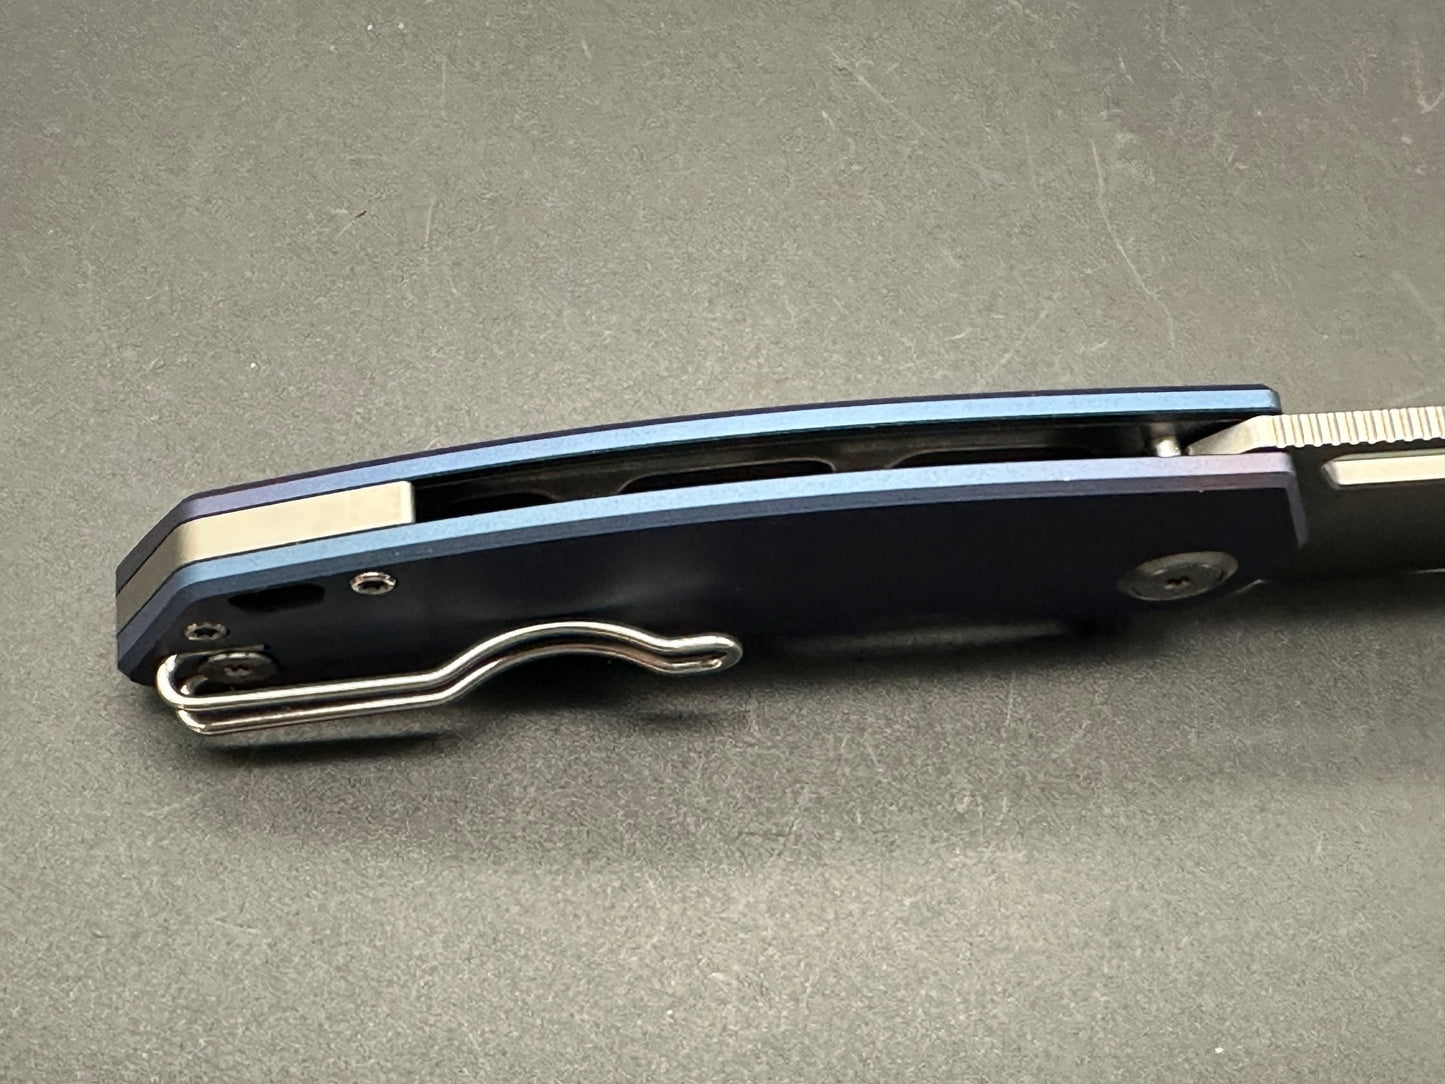 DIVO KNIVES GROWLER V2 POCKET KNIFE BLUE ALUMINUM HANDLE SANDWASHED 154CM PLAIN EDGE